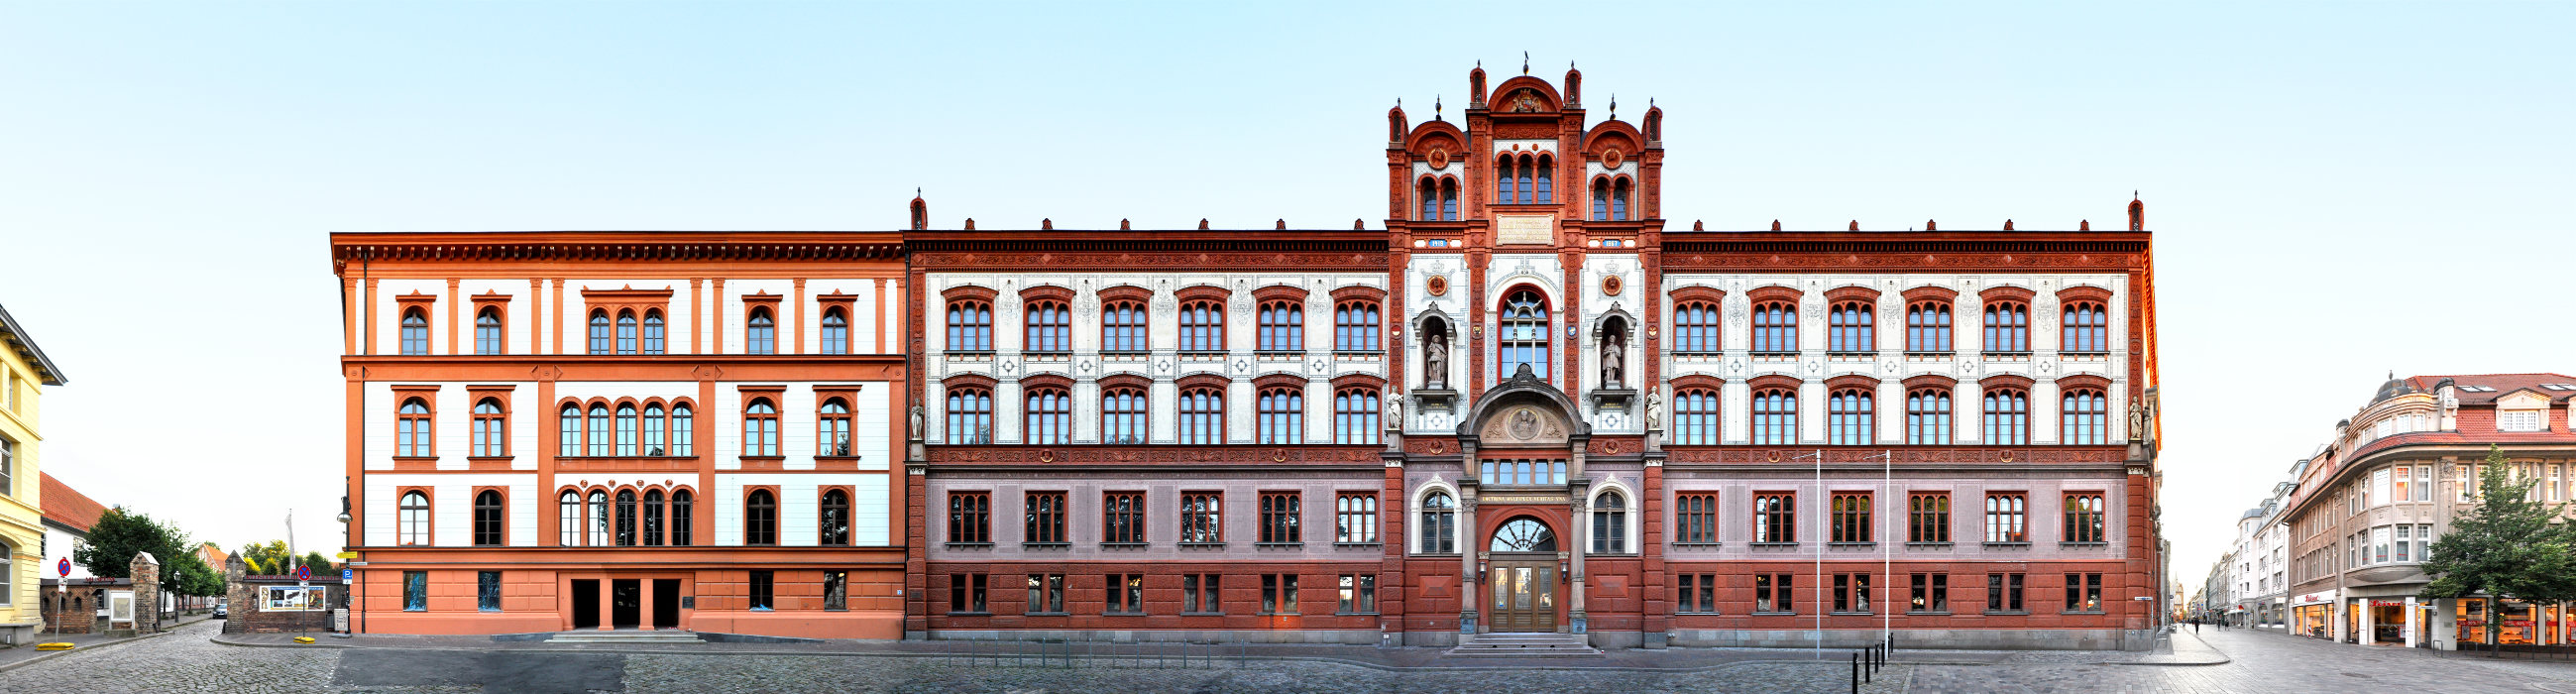 Universität Rostock Panorama Architektur Fotografie